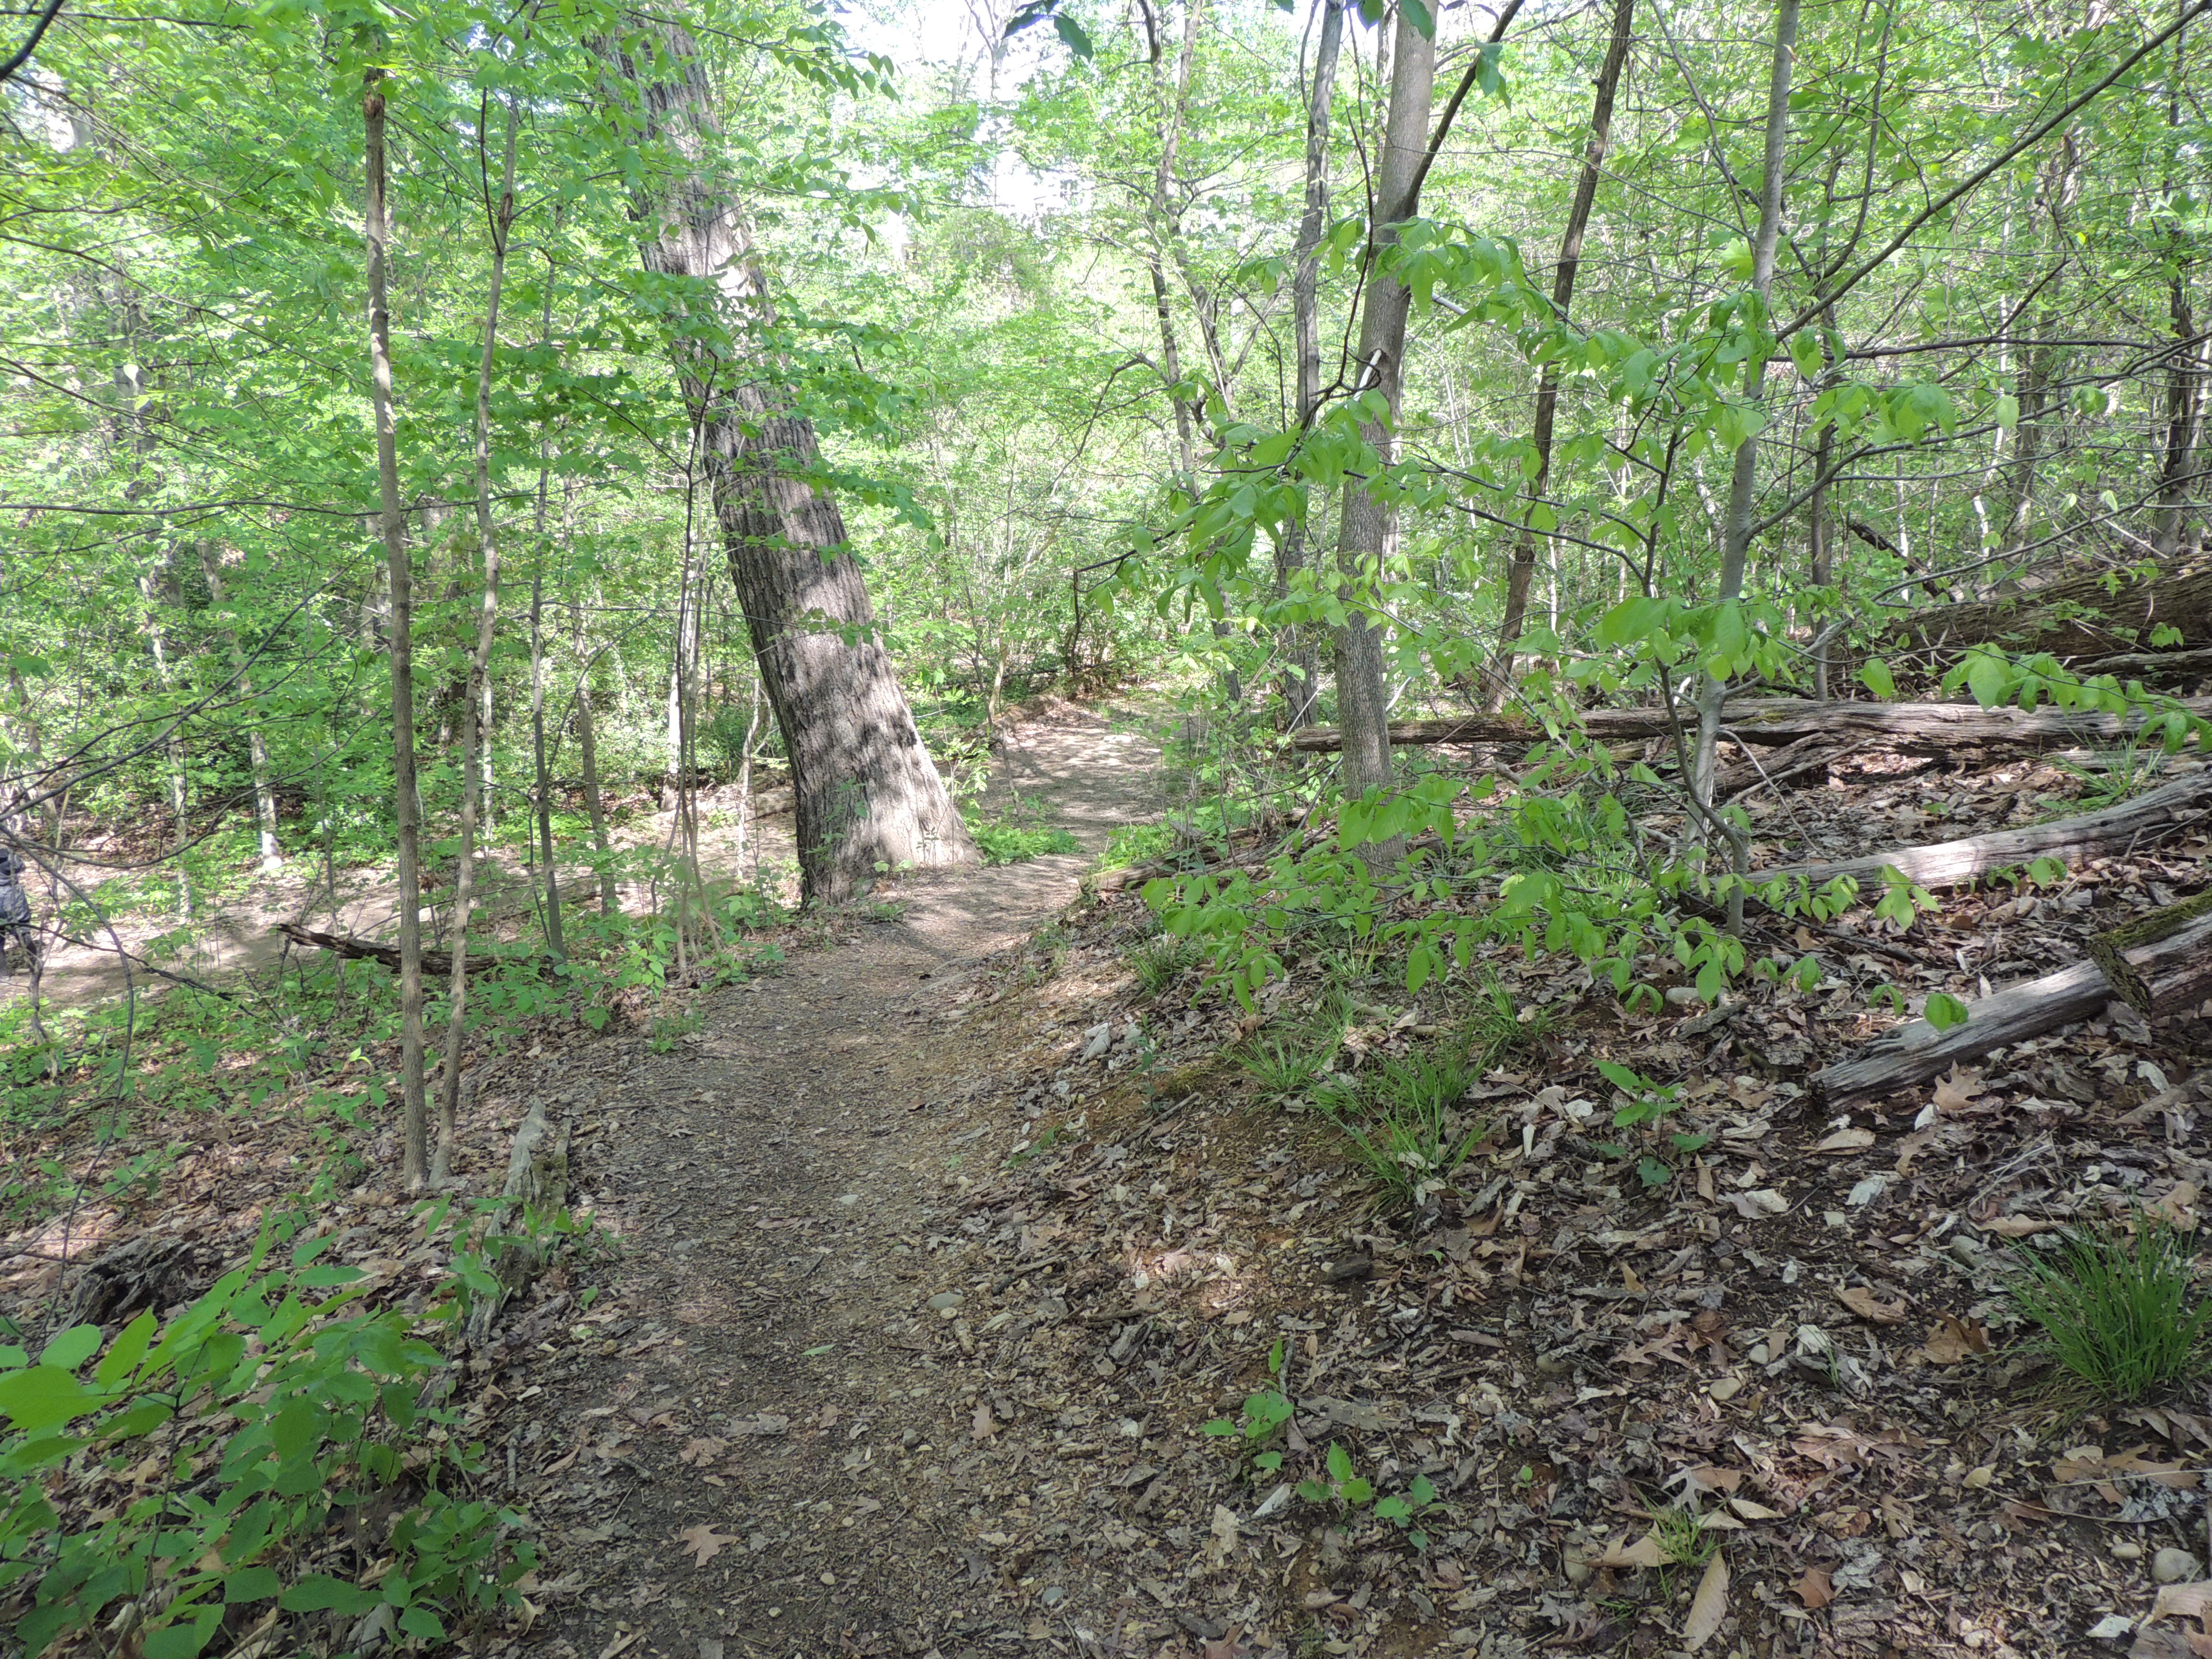 North End of the Ridge Path